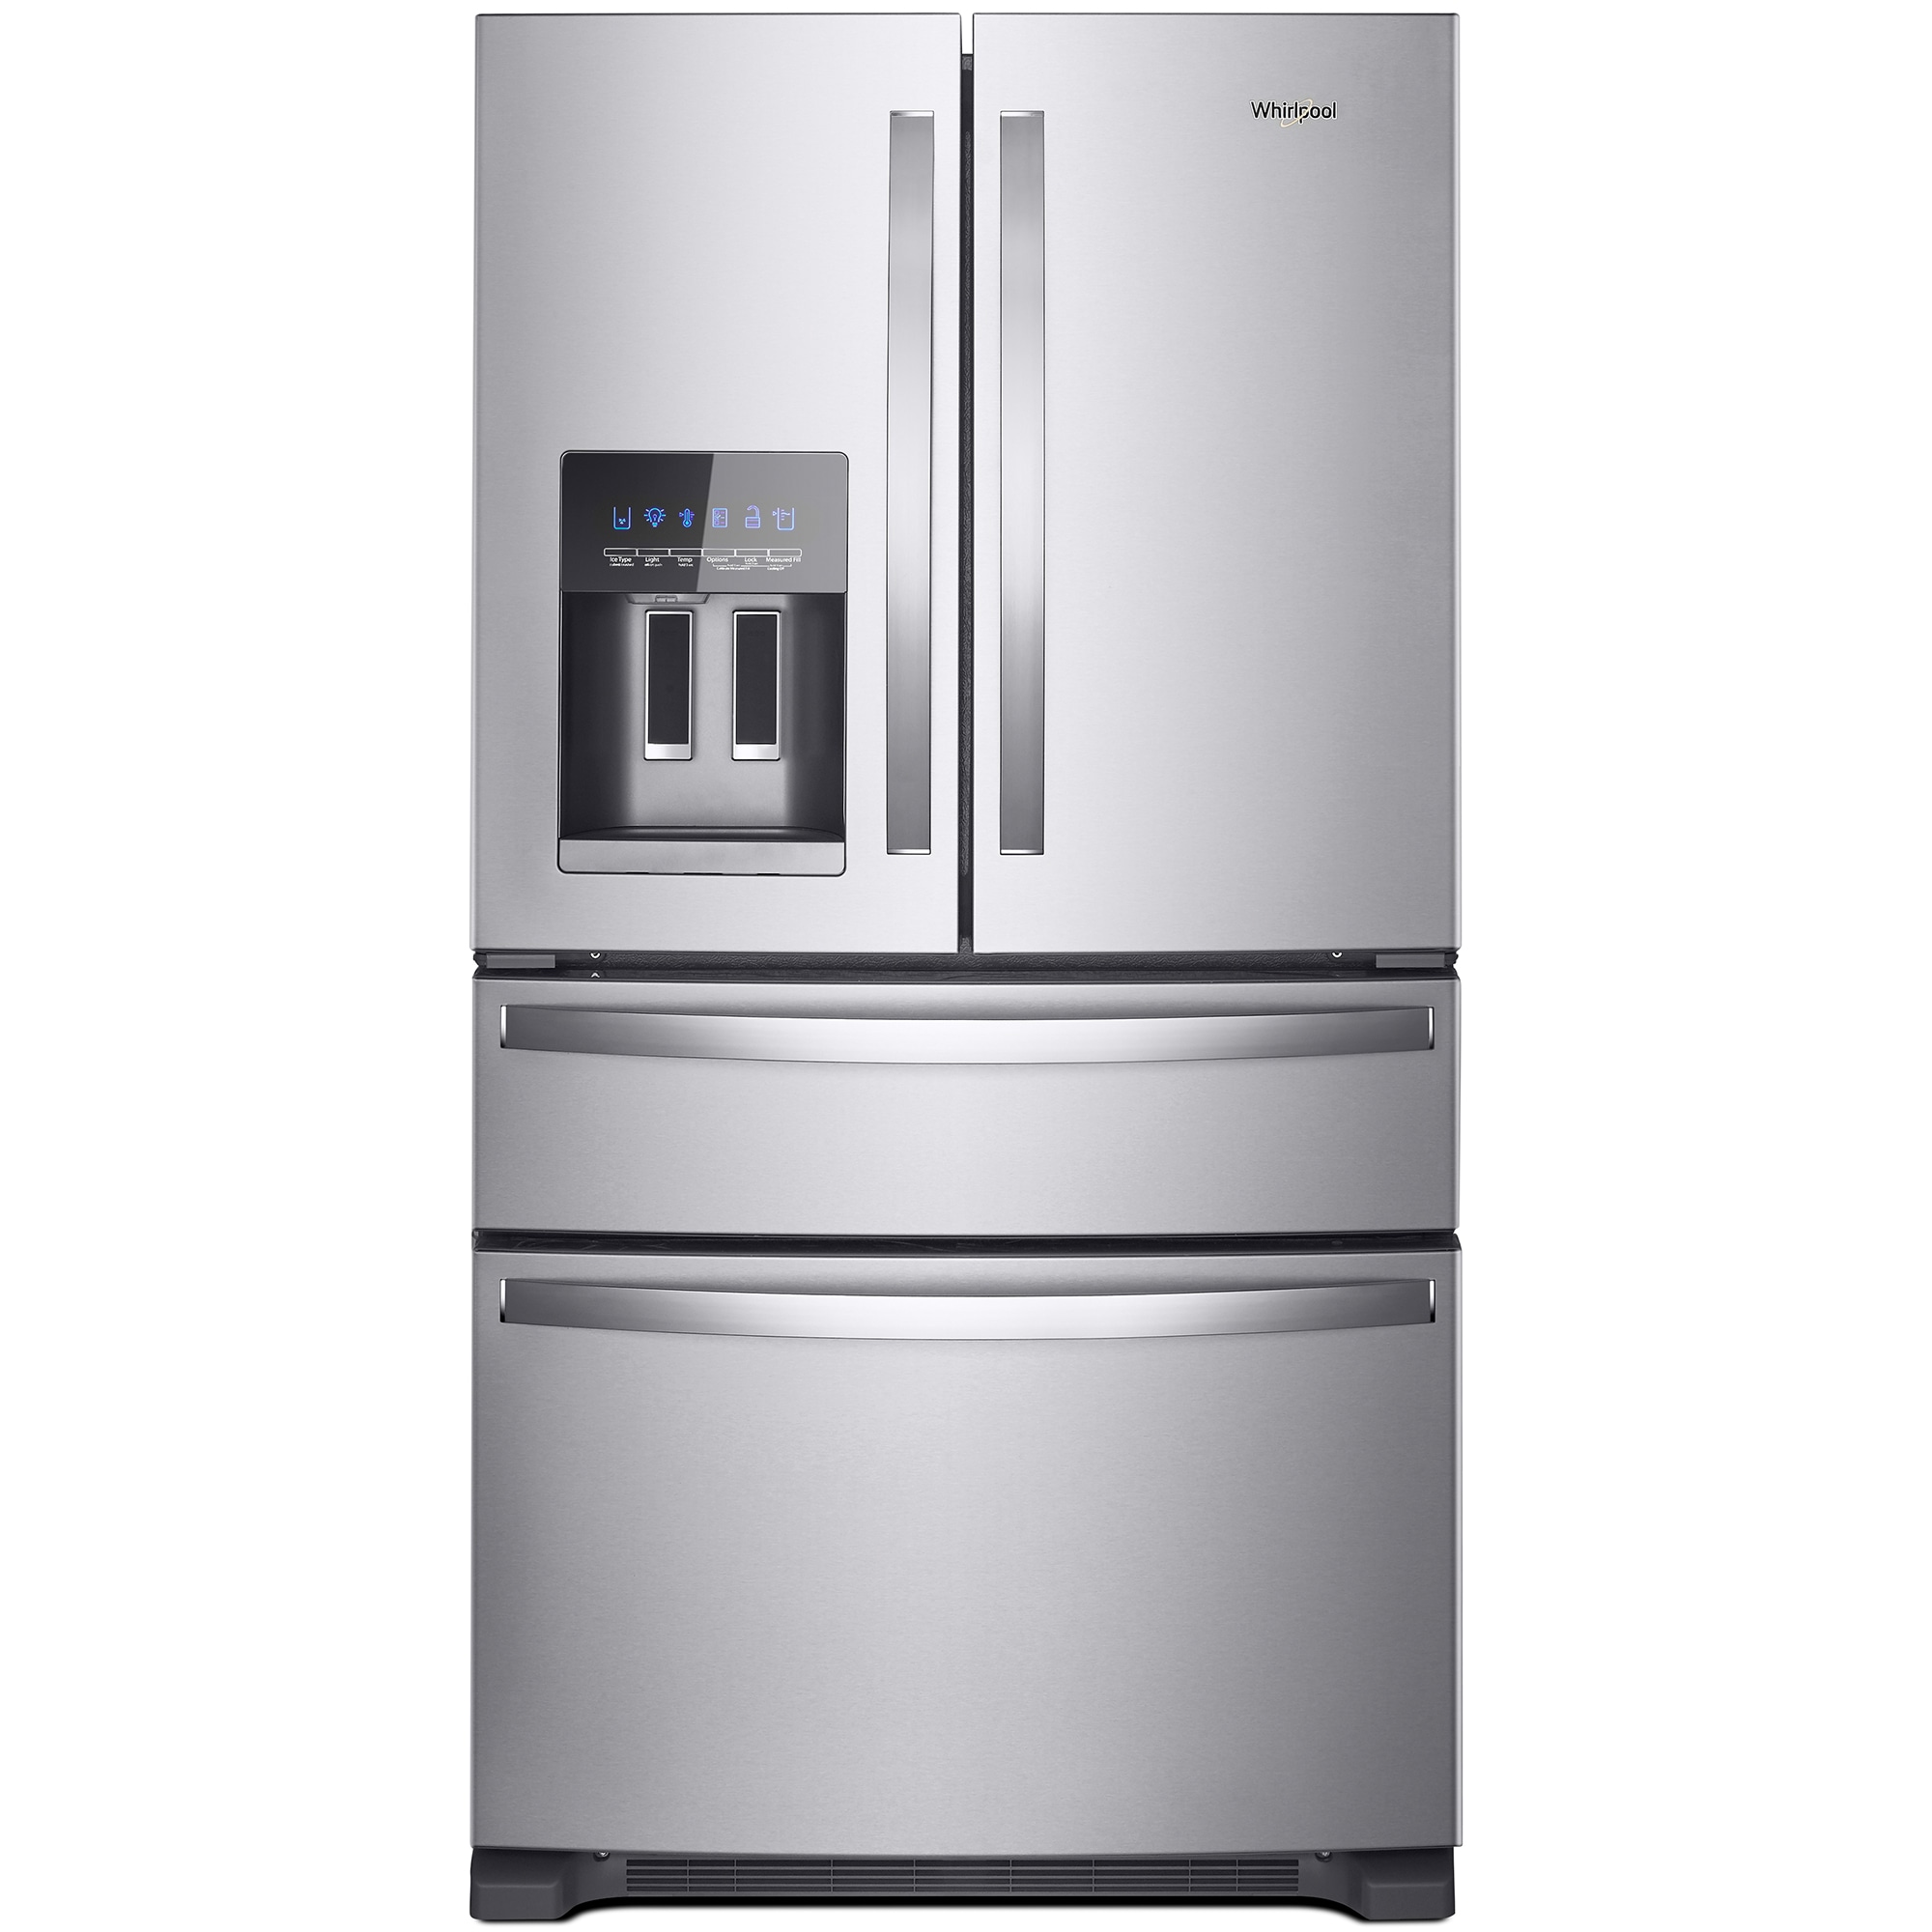 Whirlpool 36 24 5 Cu Ft French Door Refrigerator With Ice Water Dispenser Stainless Steel Pcrichard Com Wrx735sdhz